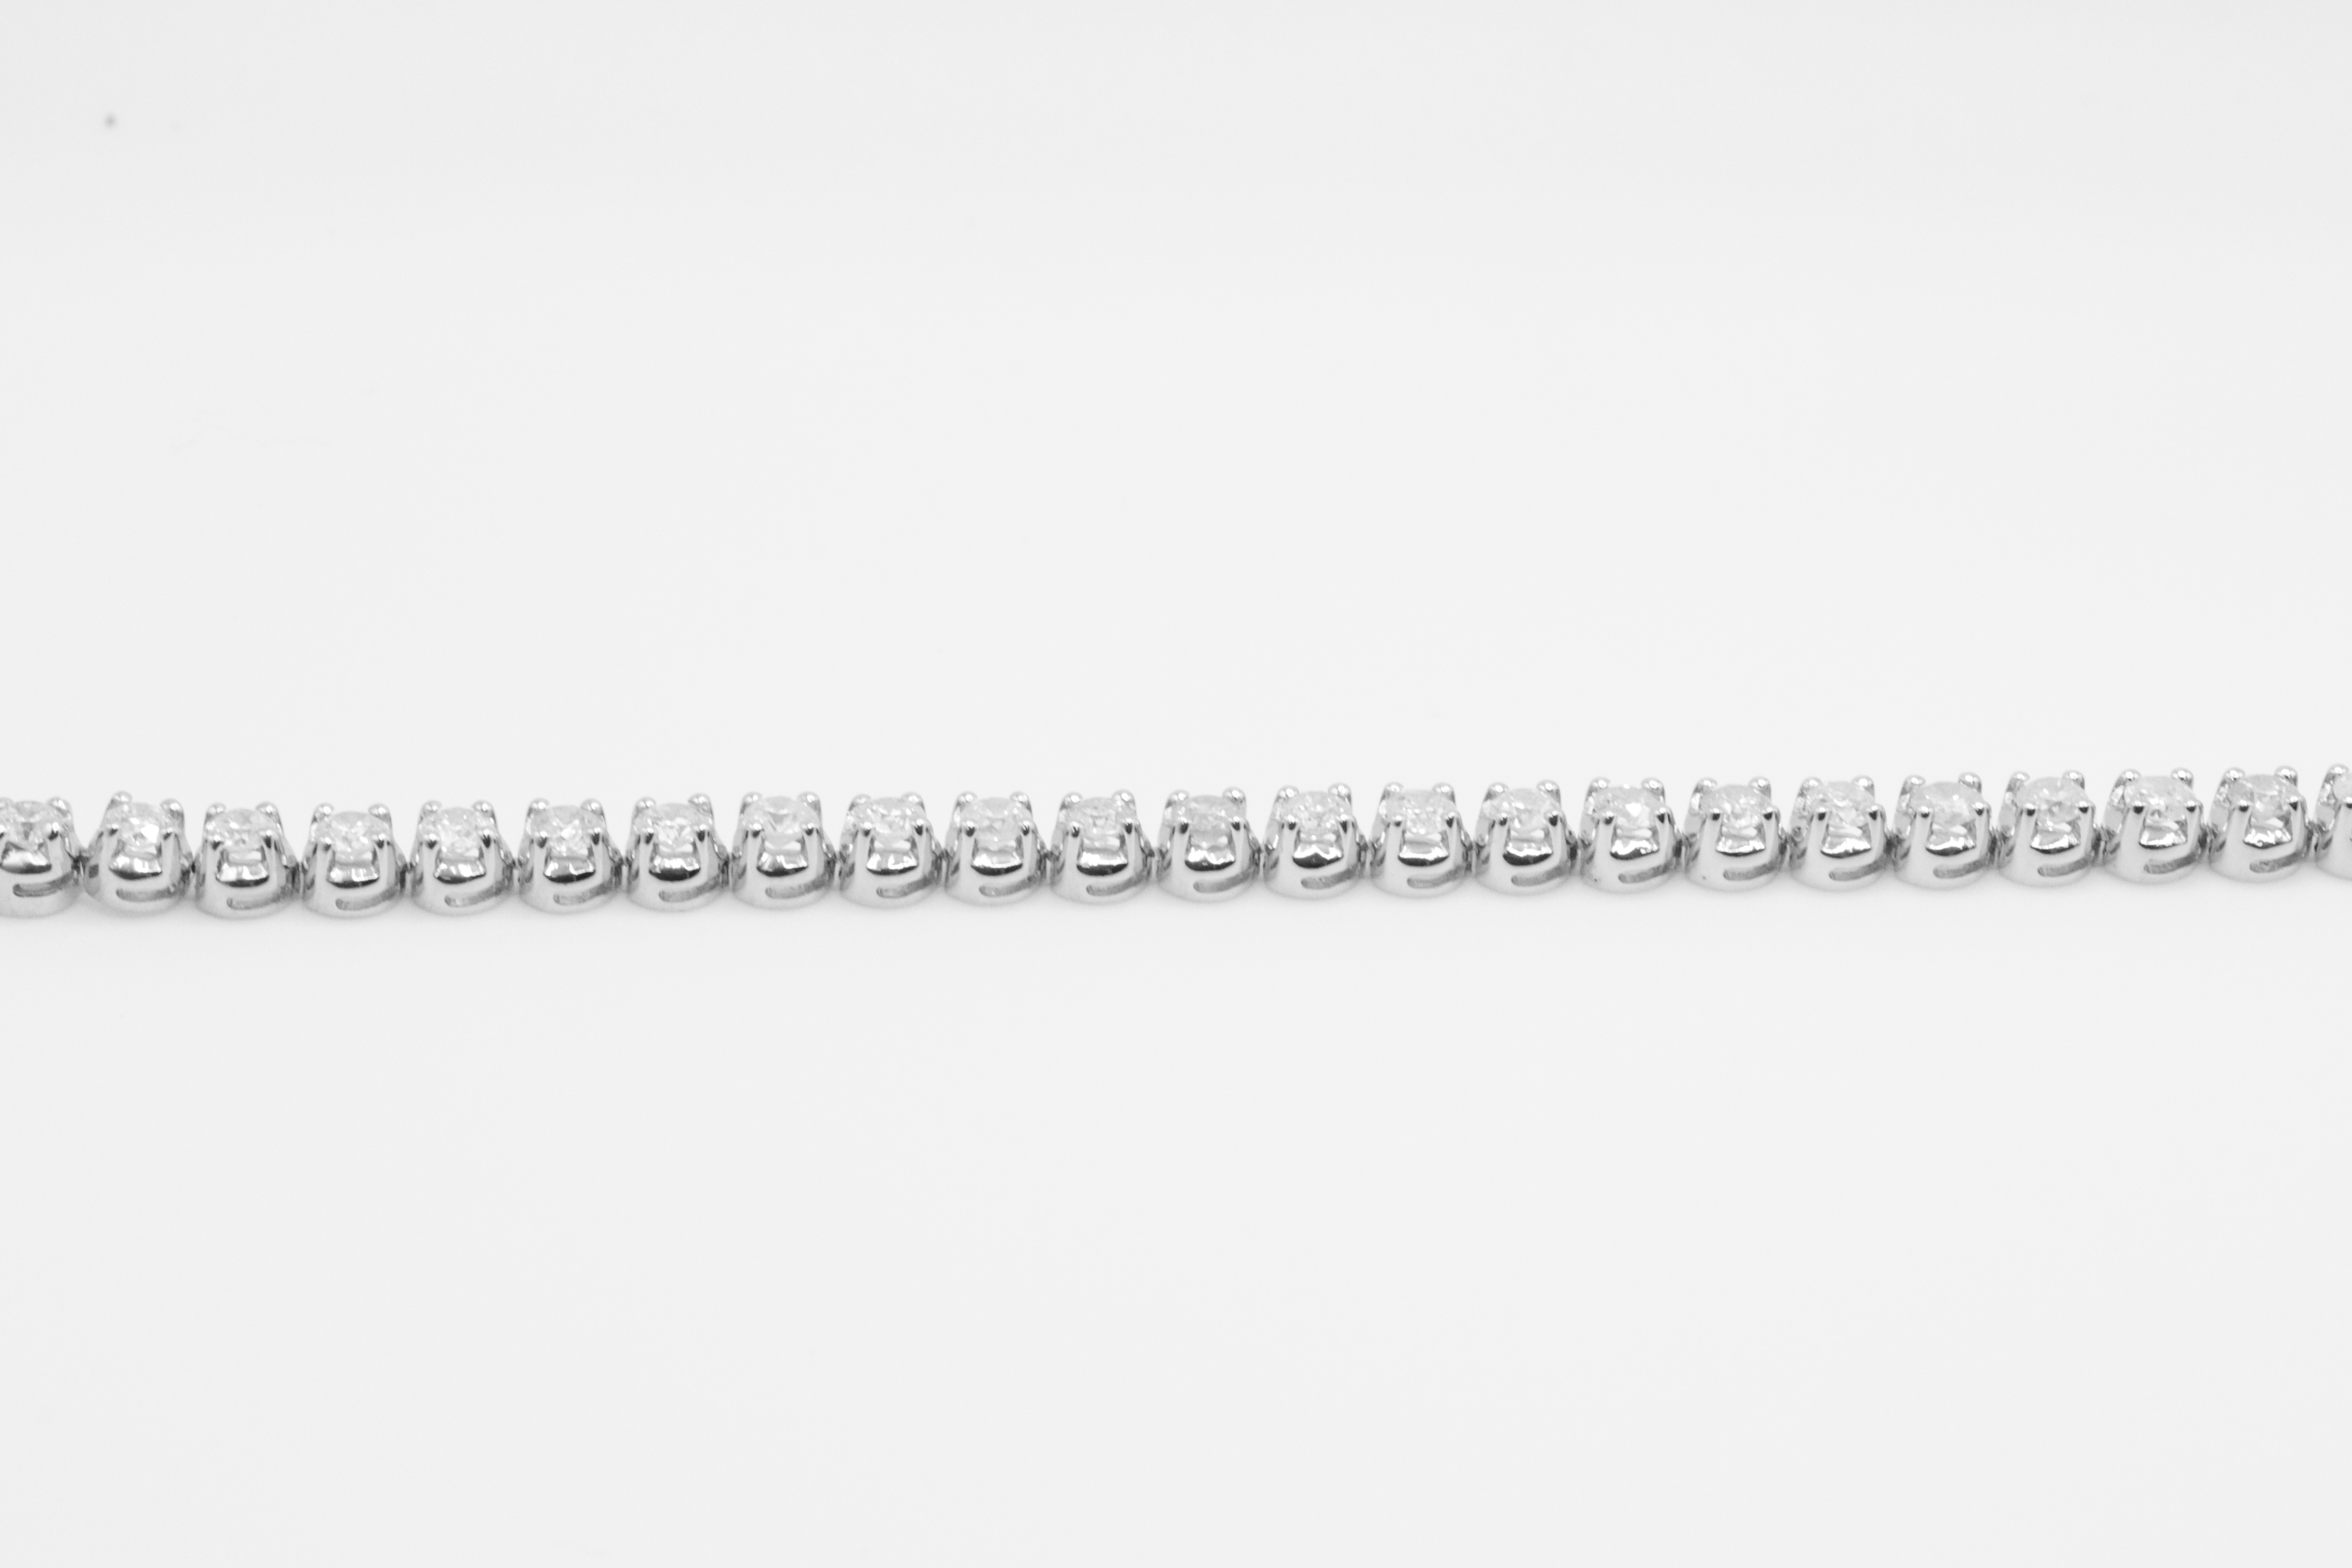 7.0 Carat 18ct White Gold Tennis Bracelet set with Round Brilliant Cut Natural Diamonds - Image 9 of 16